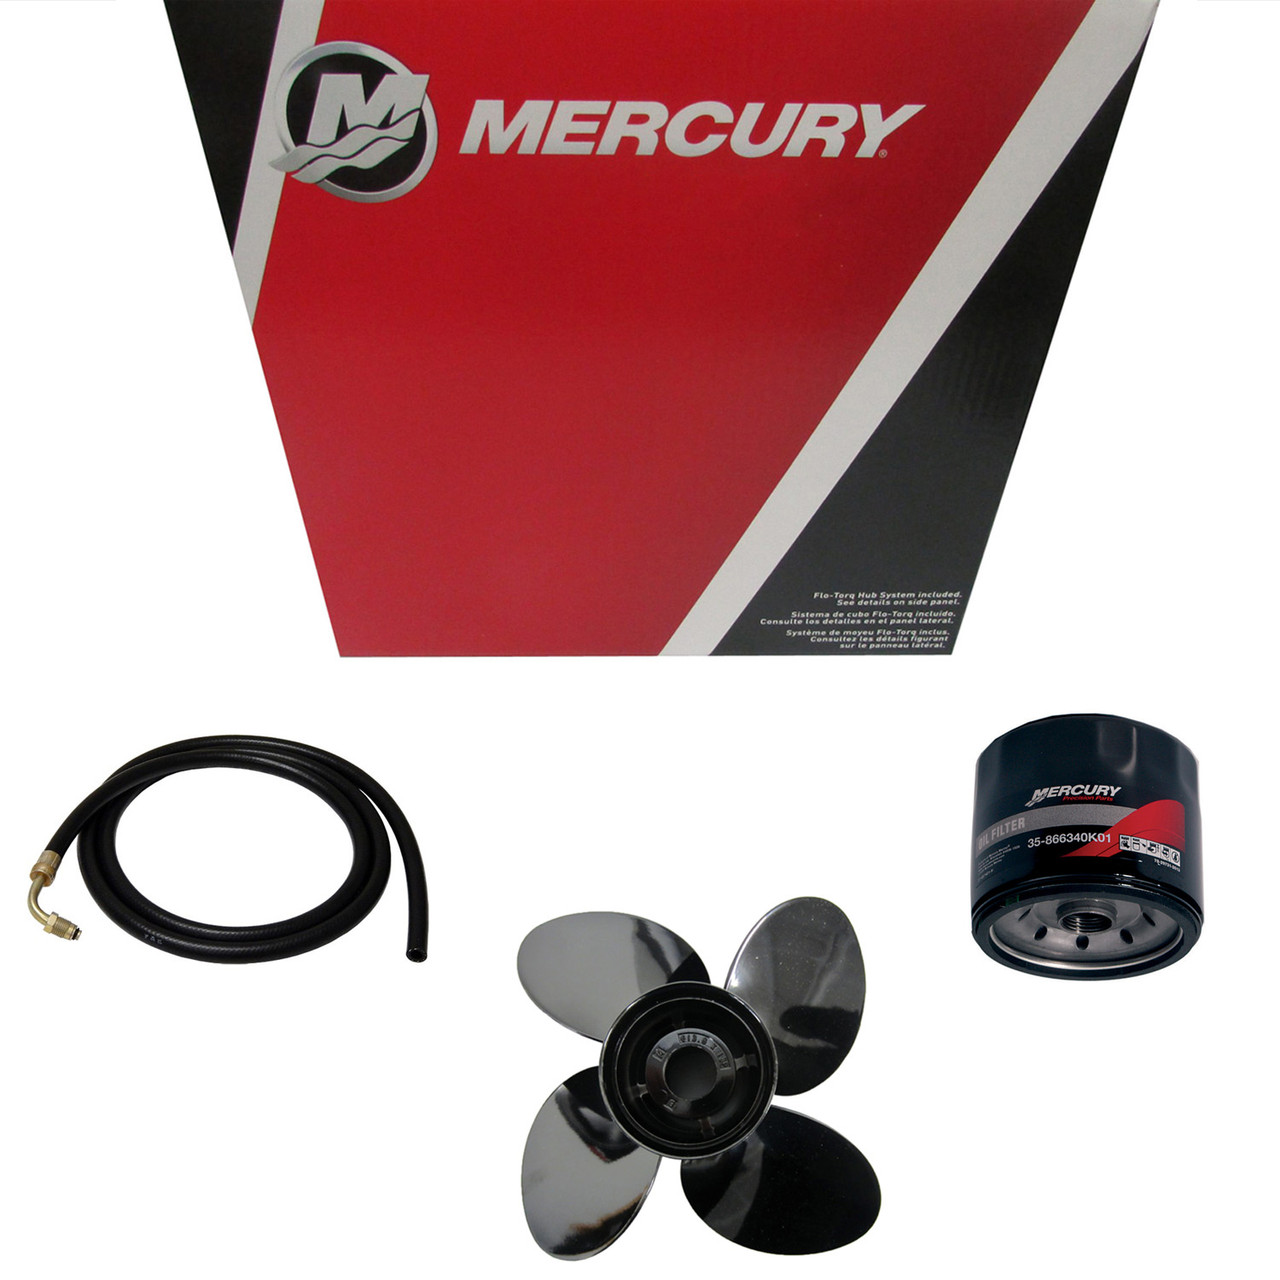 Mercury Marine / Mercruiser New OEM Hi-Perf Gear Lube, 92-858068Q01